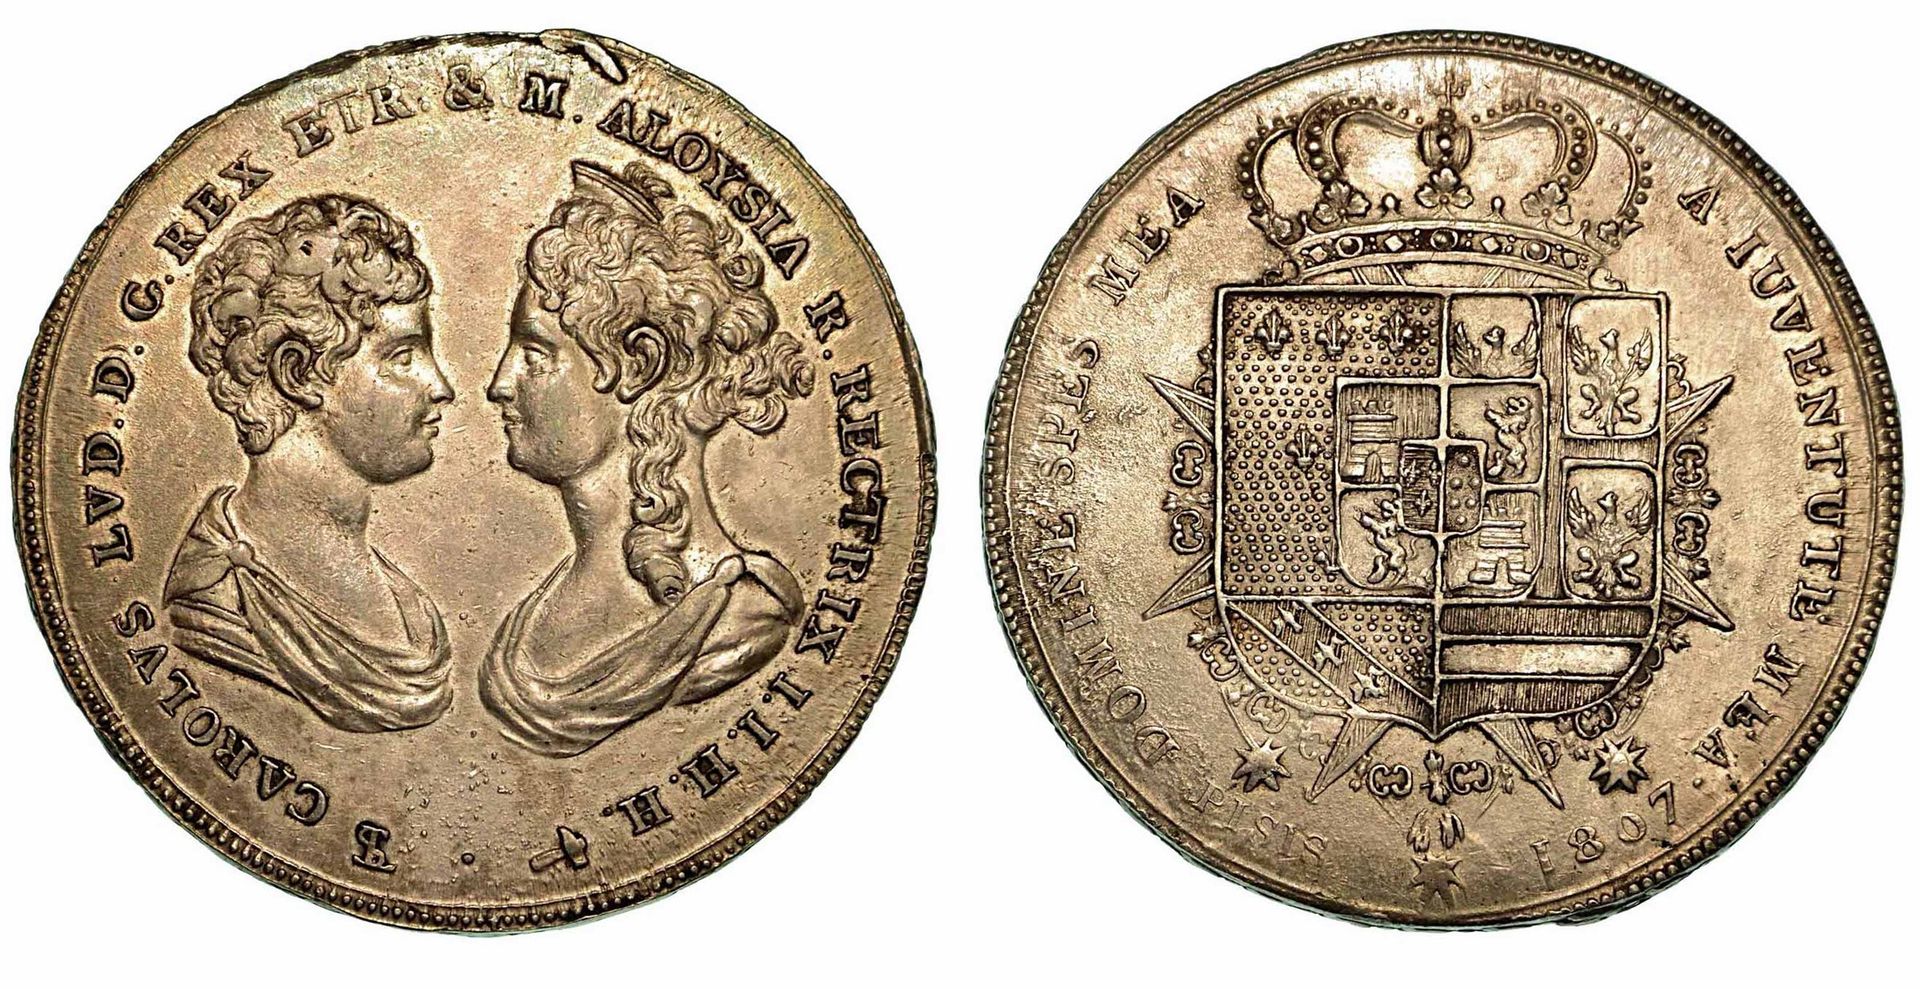 FIRENZE., Francescone 1807. 半身像相互对峙。R/ 纹章。银g. 27.26. Q.SPL